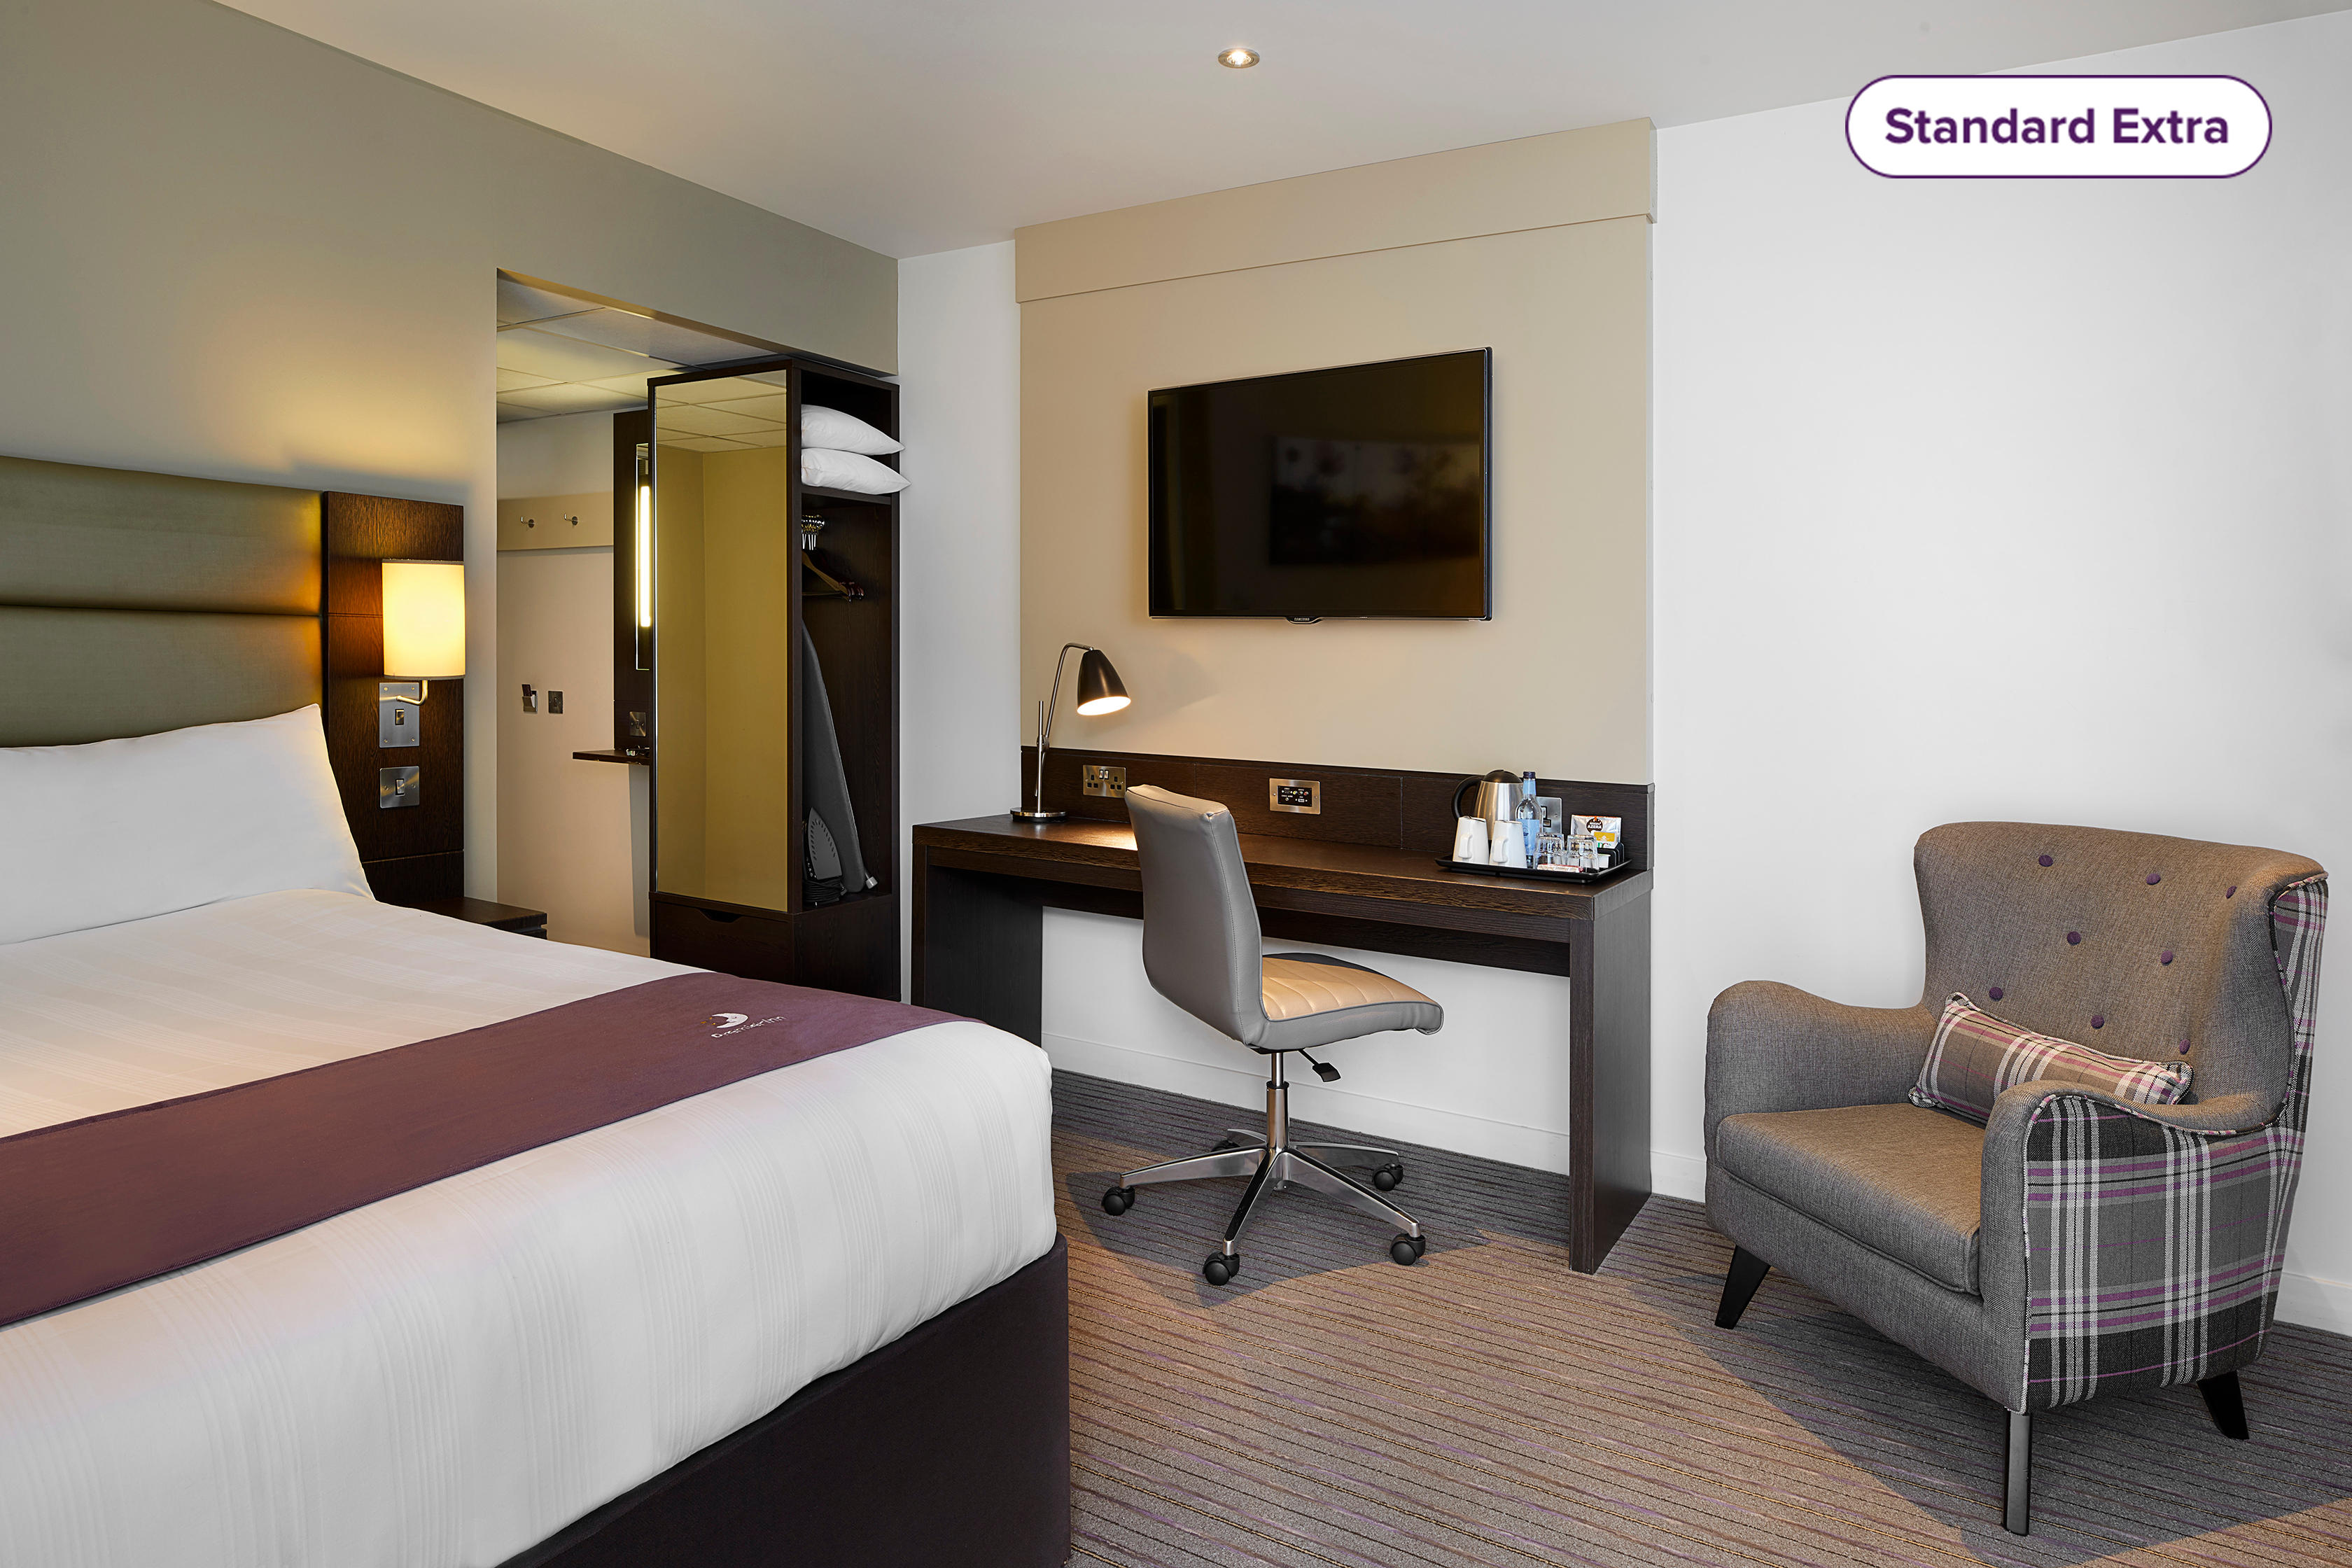 Standard Extra Bedroom Premier Inn Liverpool City Centre (Moorfields) hotel Liverpool 03333 211233